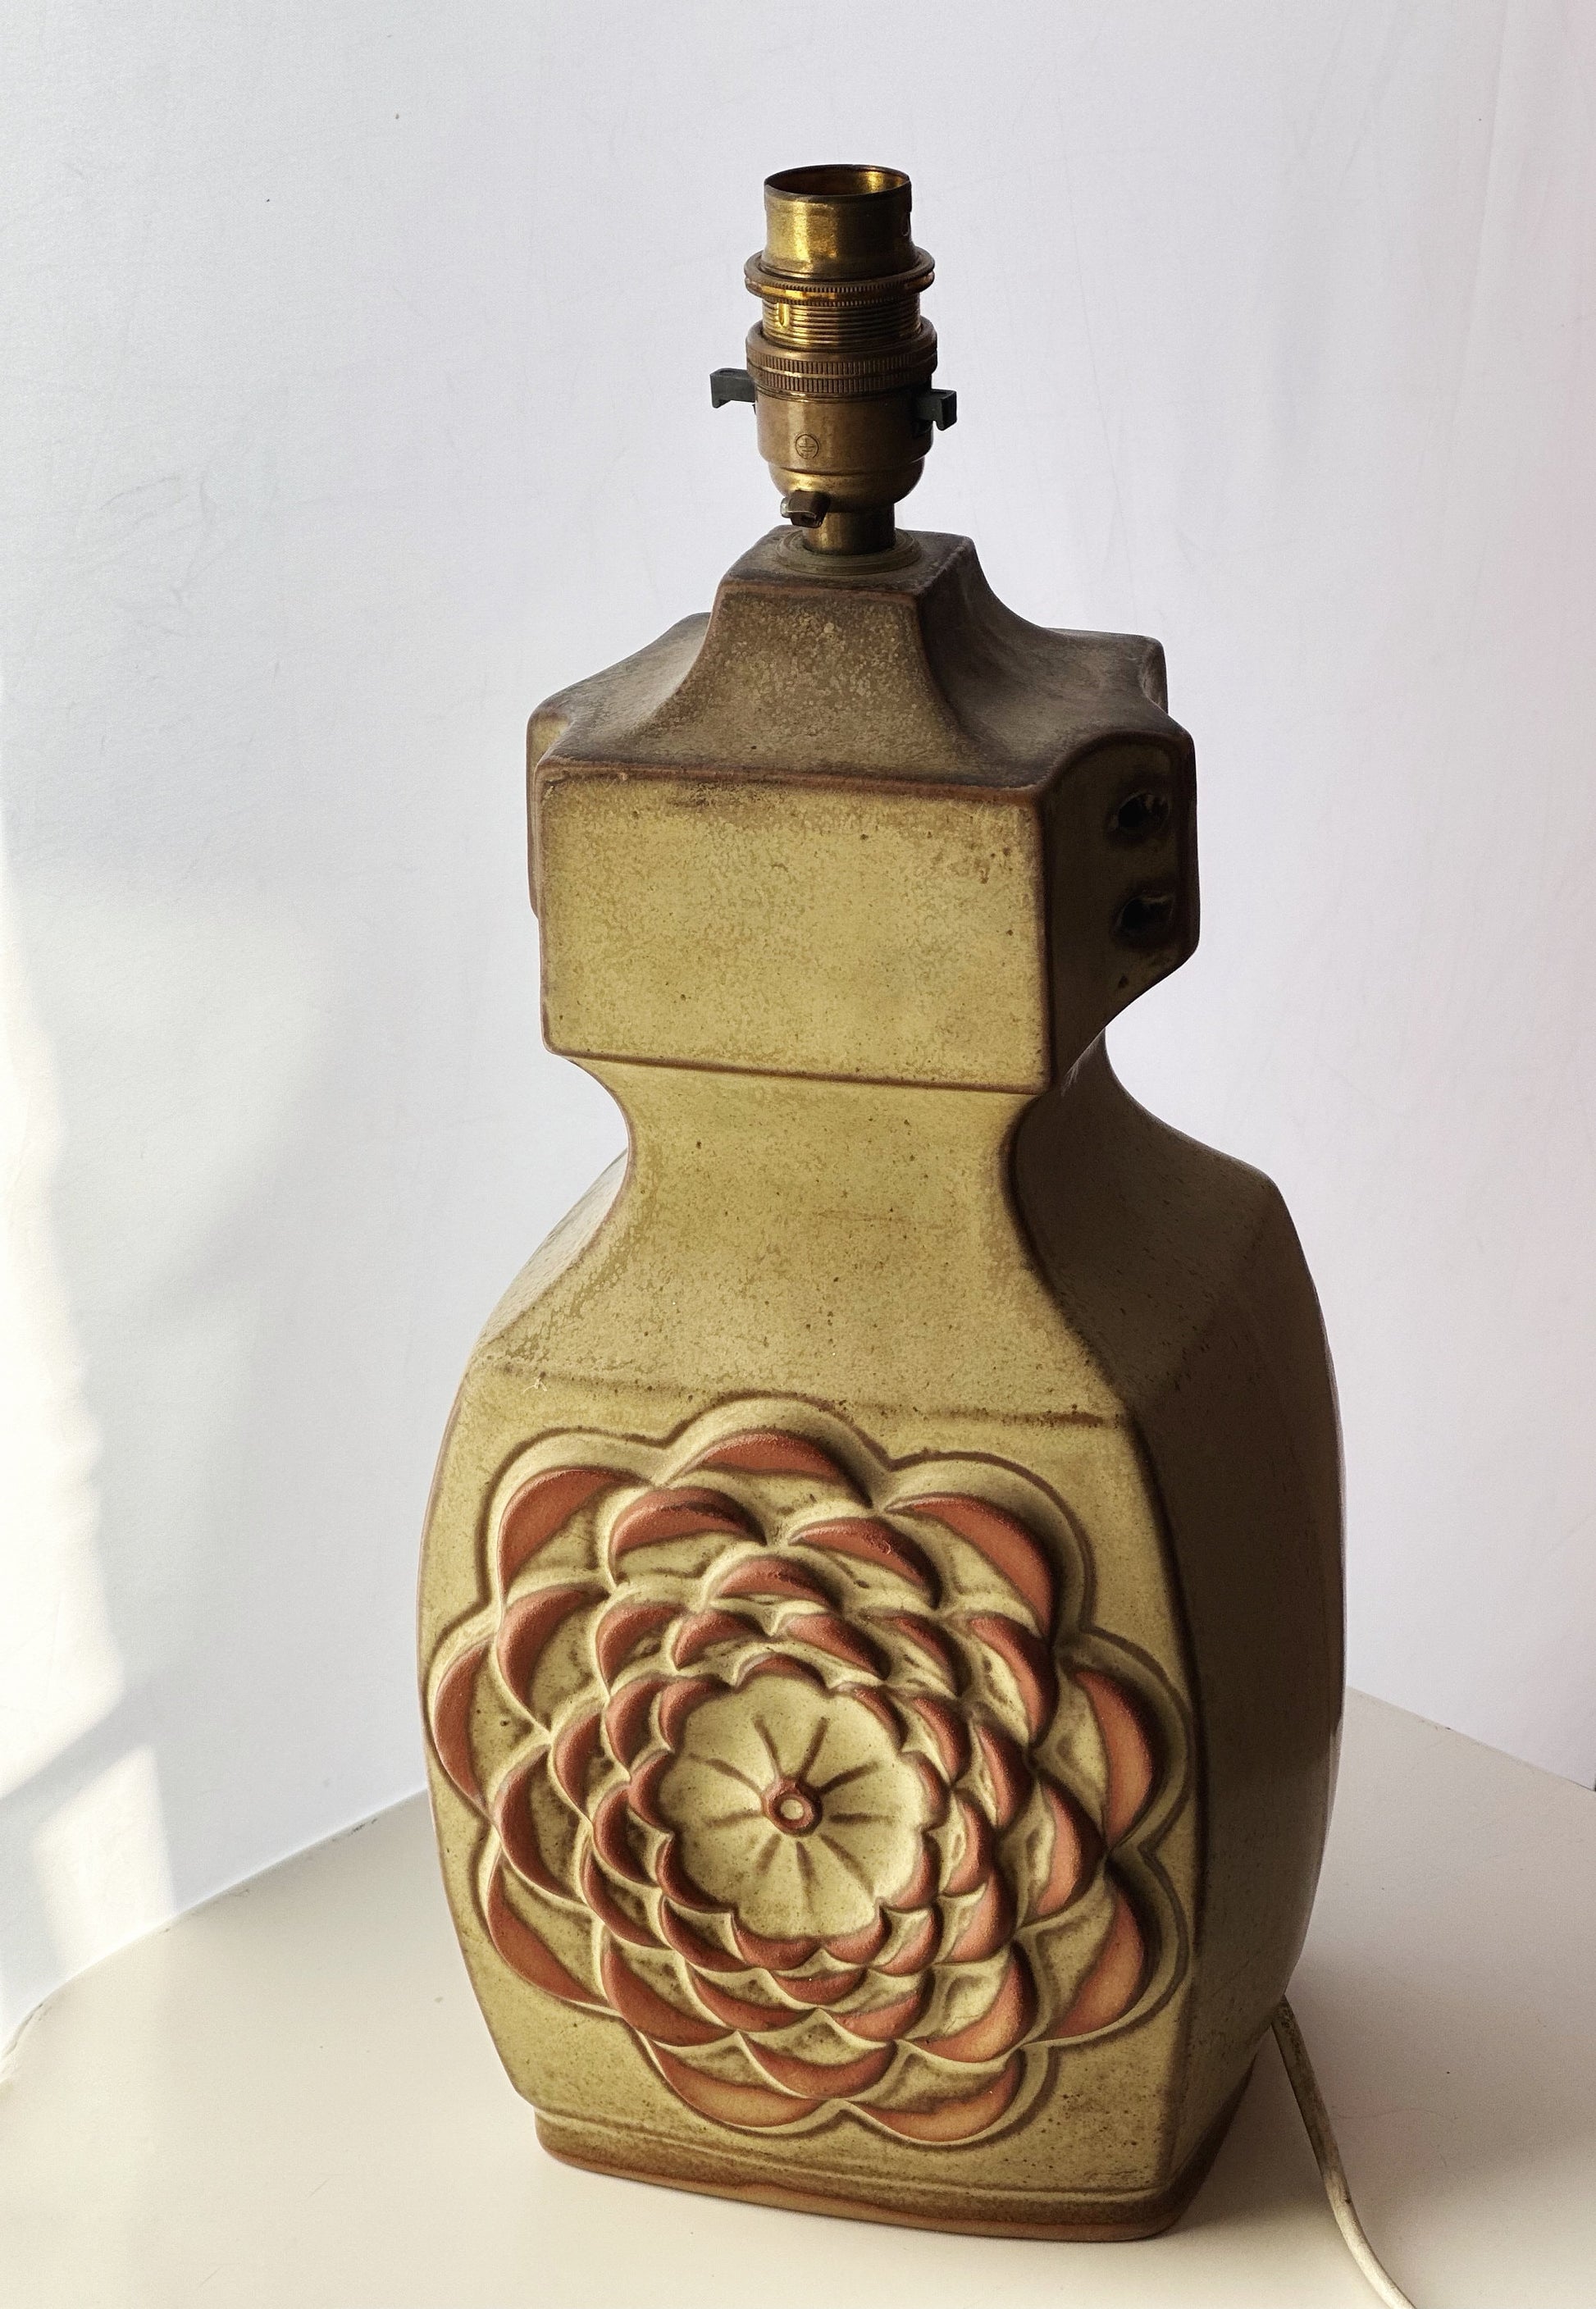 Cornish Ceramic Lamp Base, 1984-1988, British Pottery